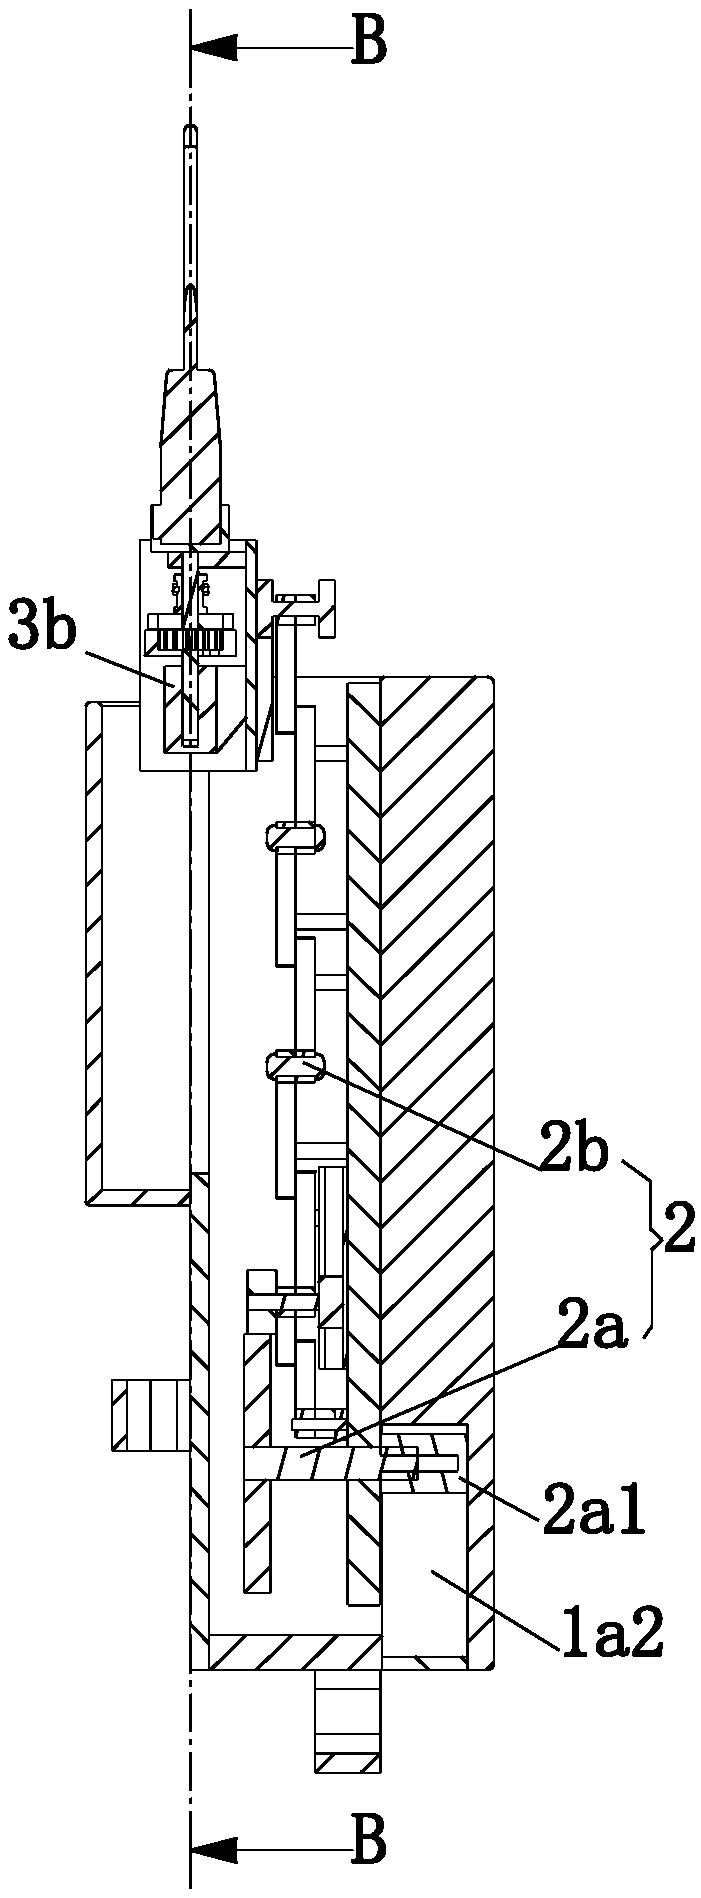 Multifunctional steel bar binding device